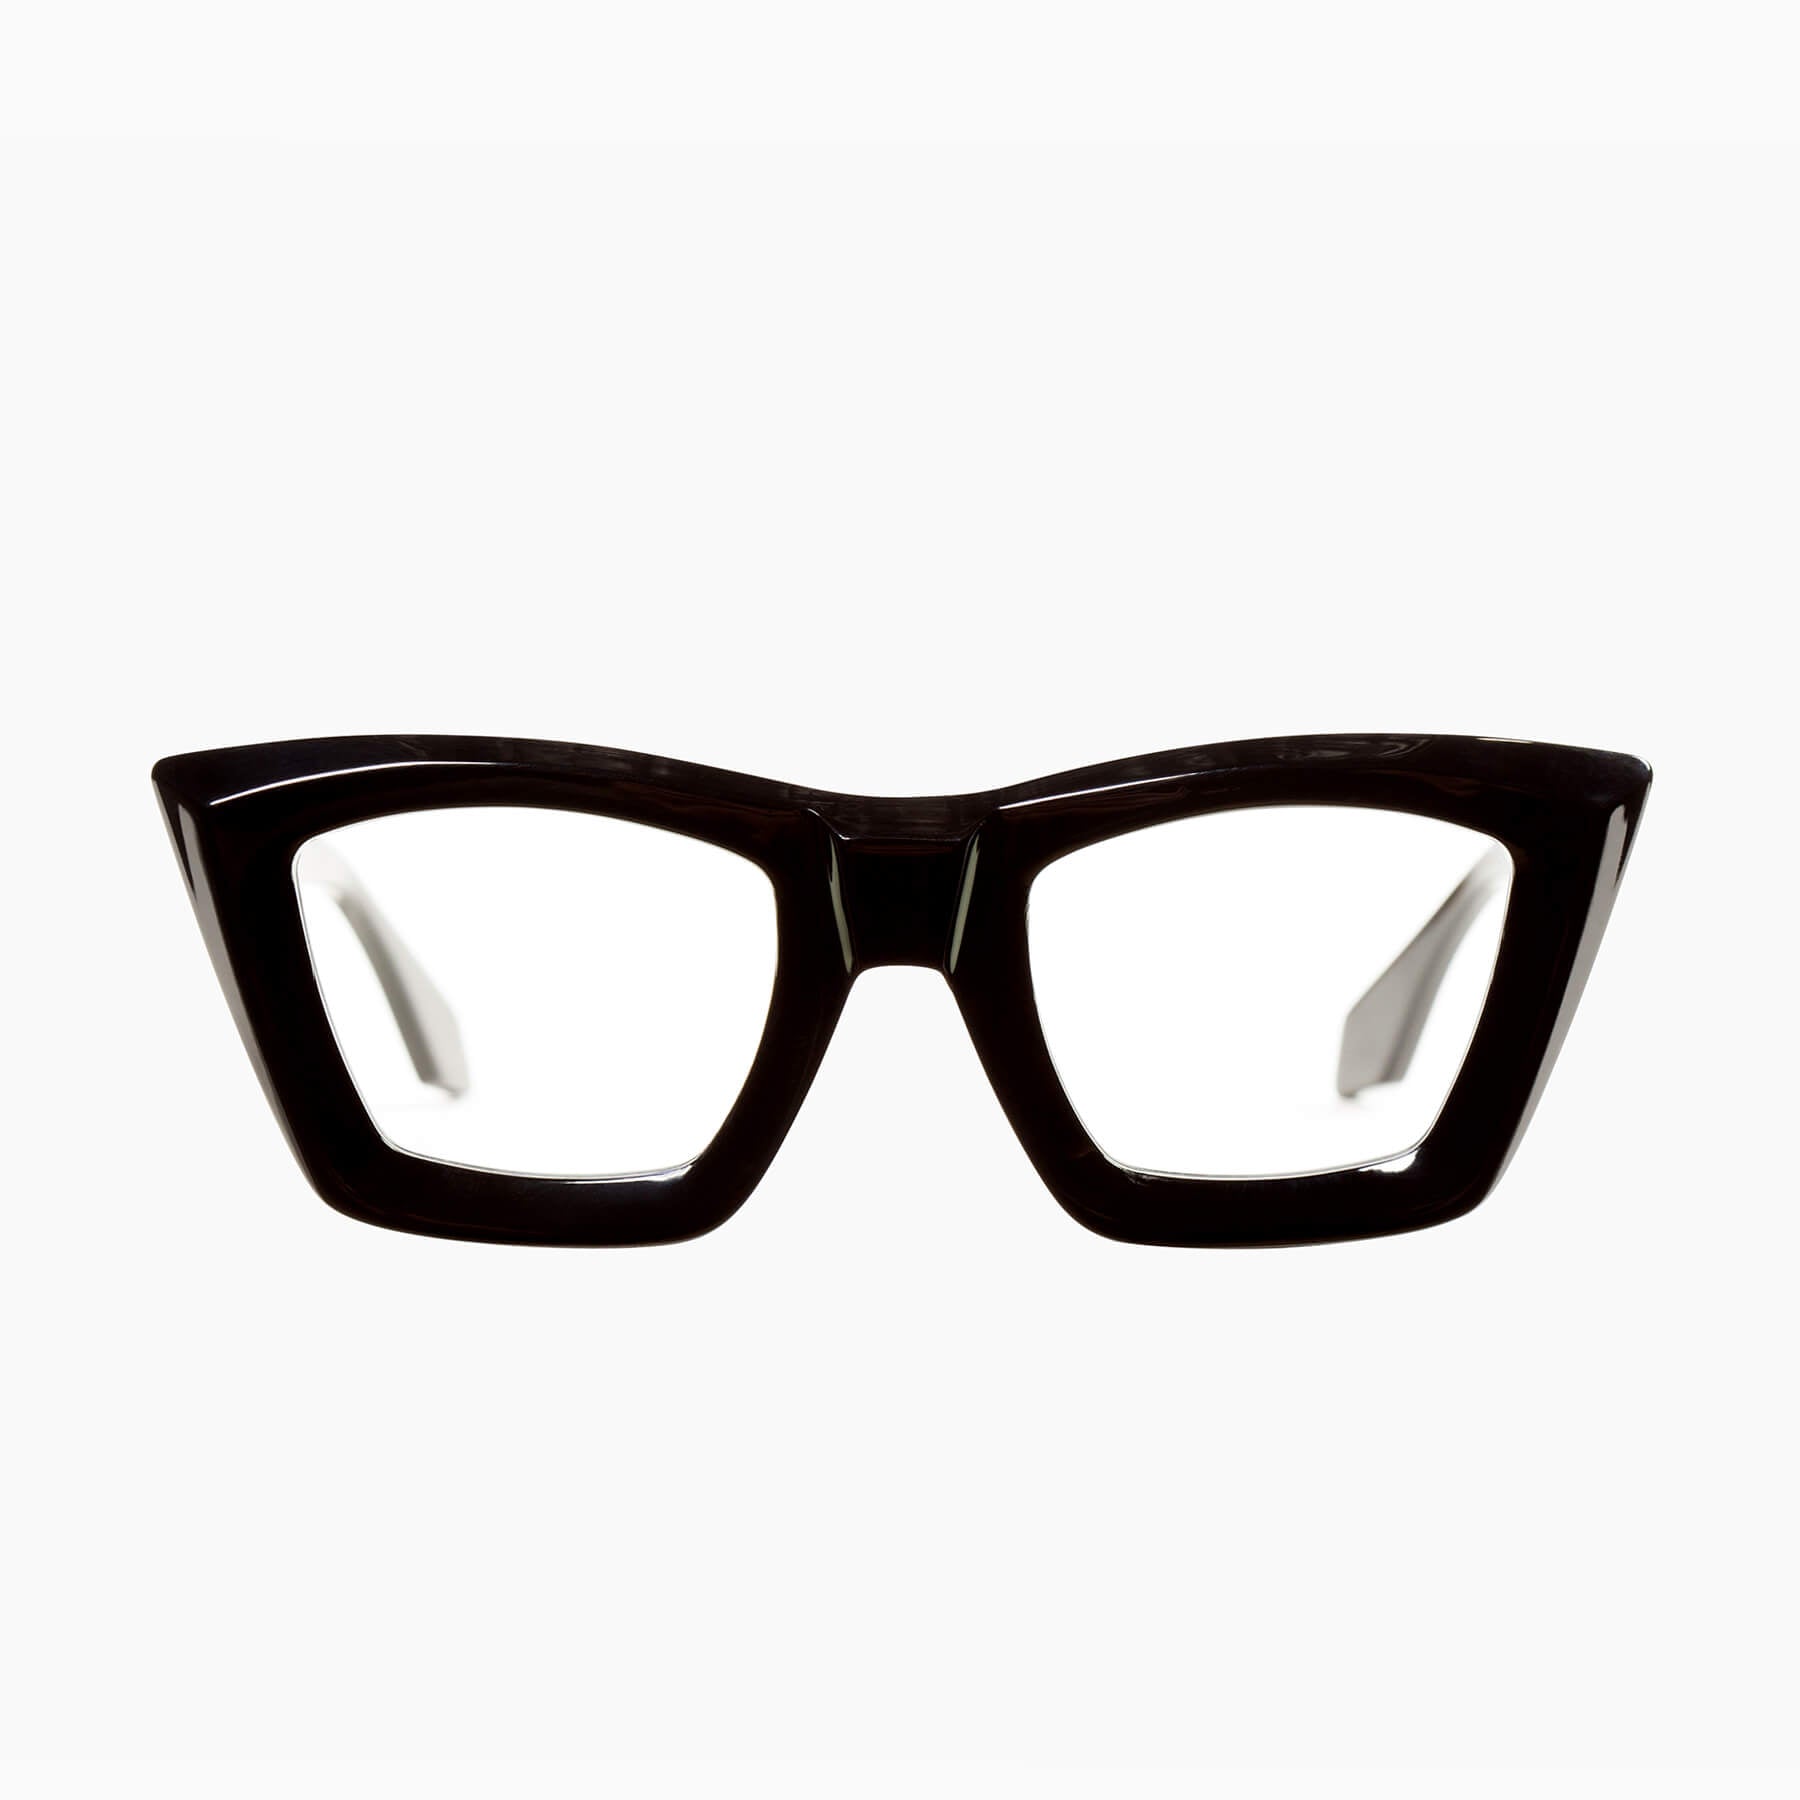 Louis Vuitton LV Link One Cat Eye Sunglasses Pink Metal. Size W